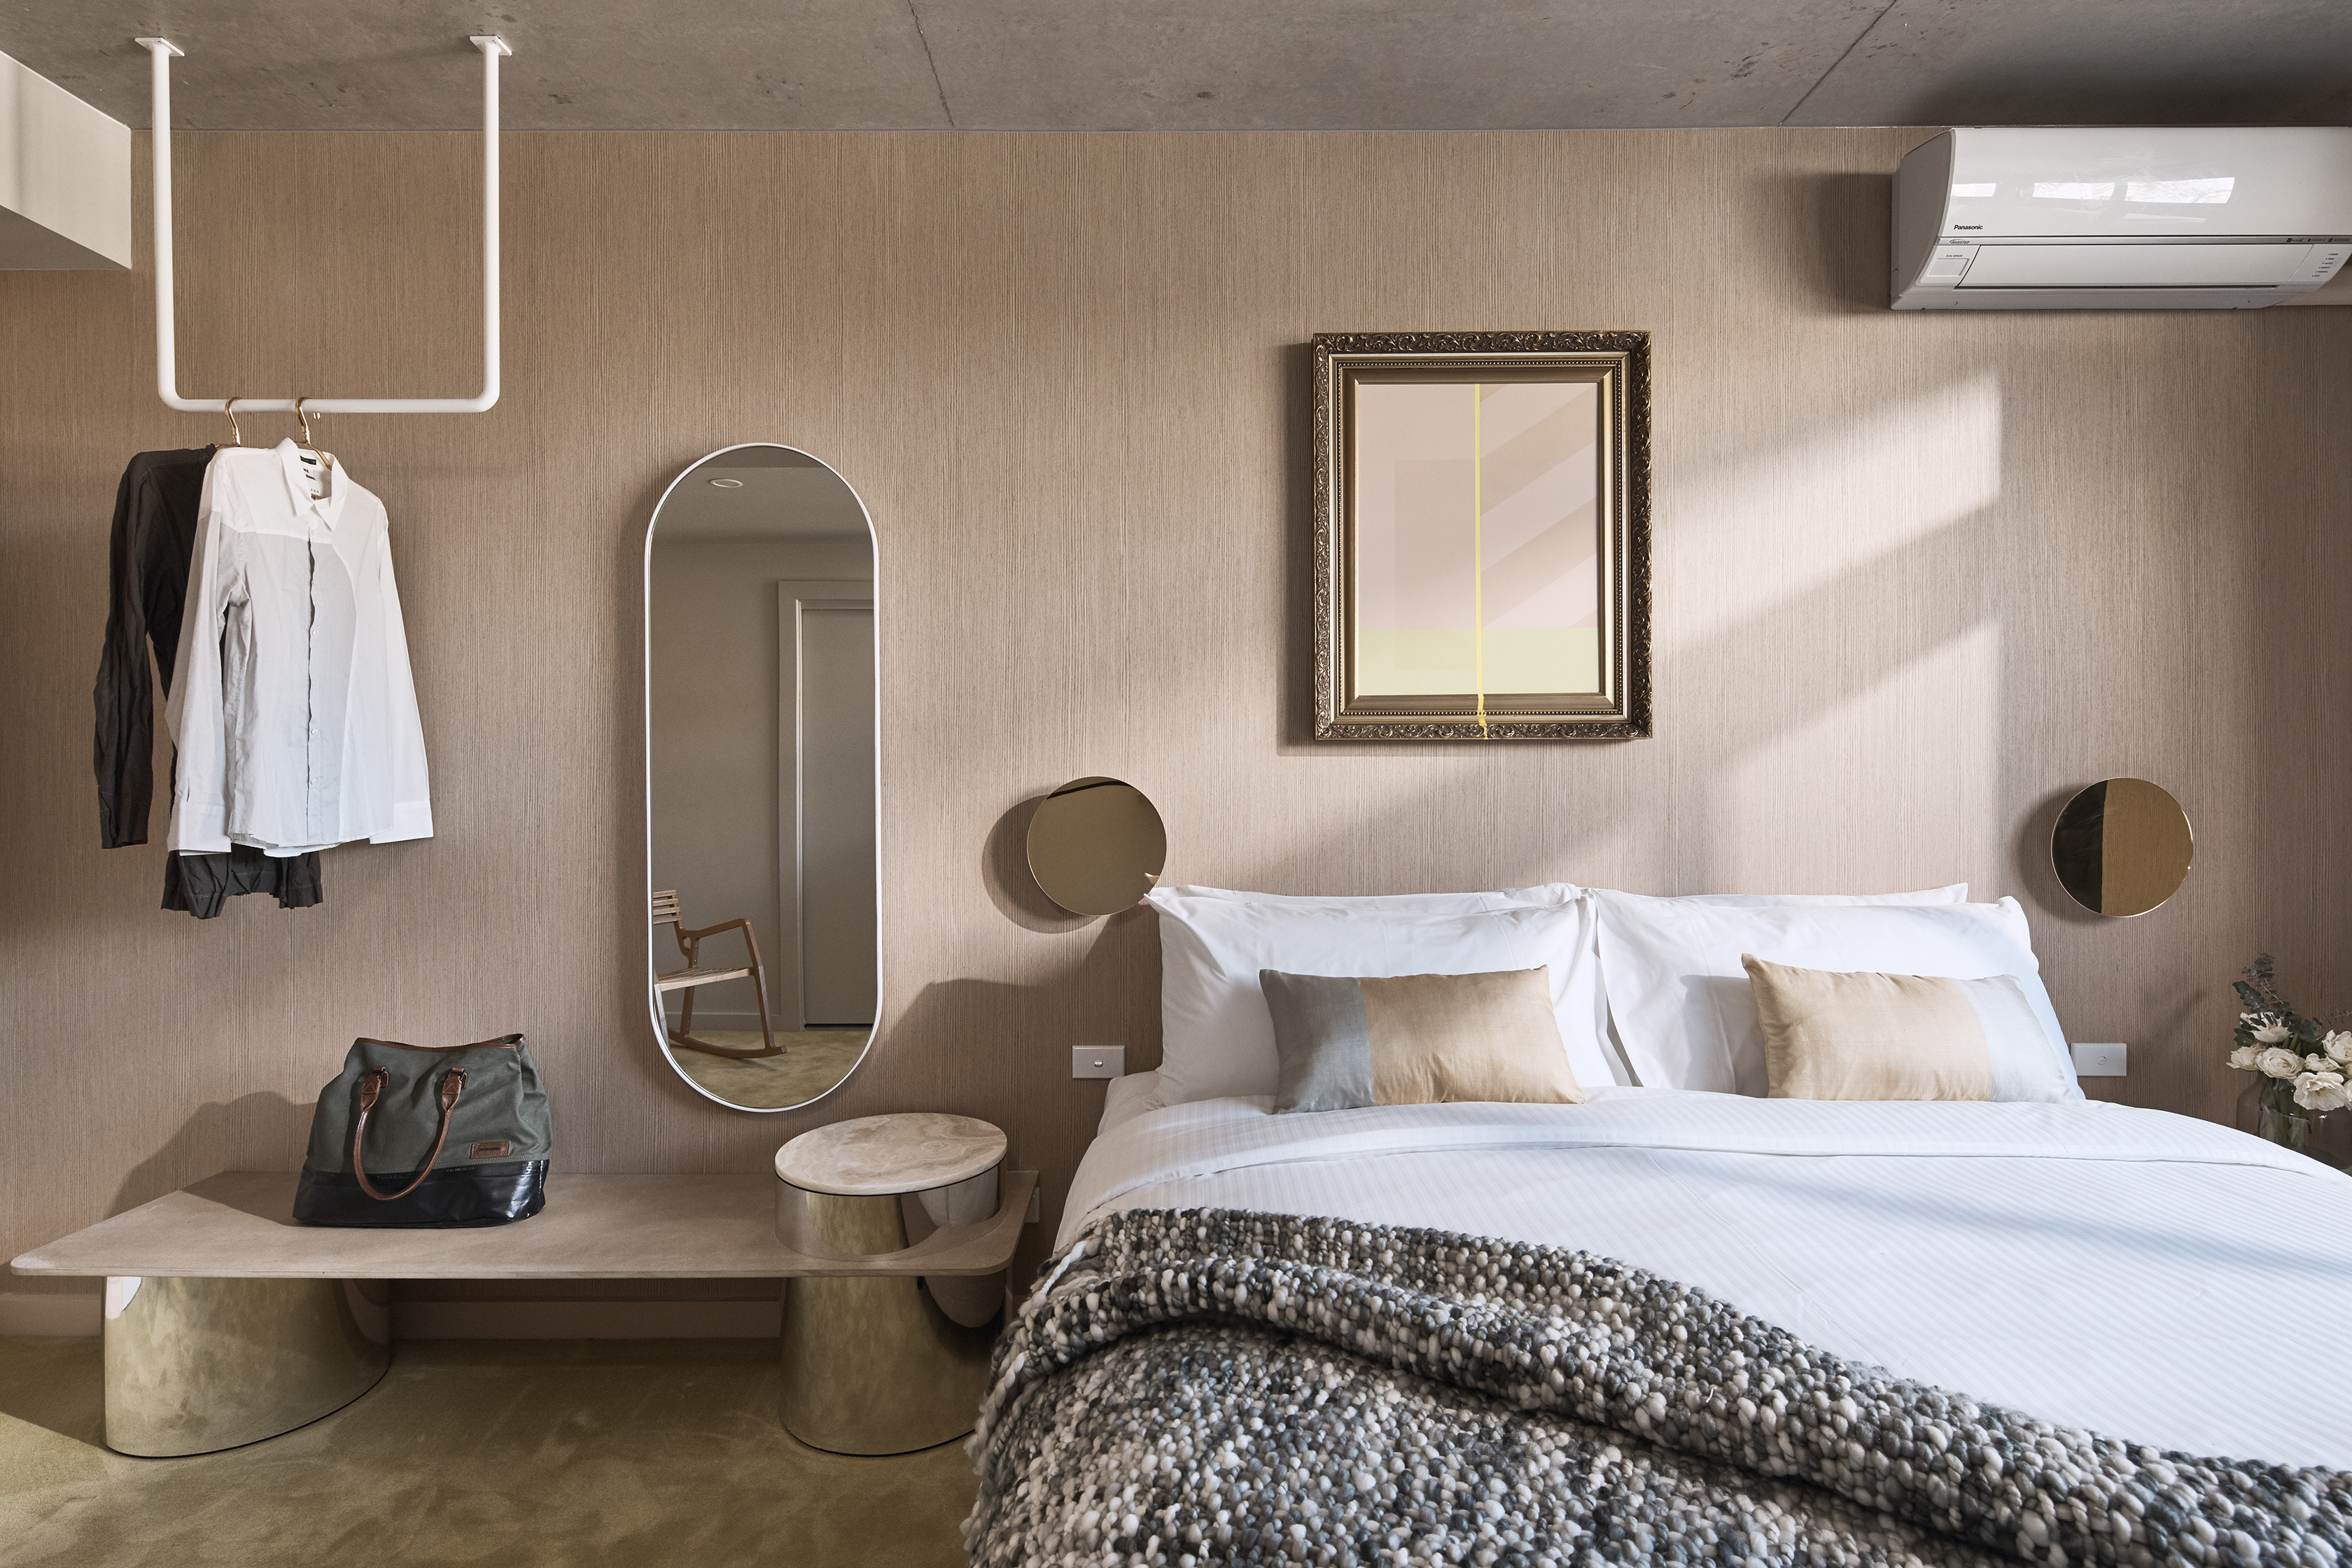 Willis Sheargold designed room room